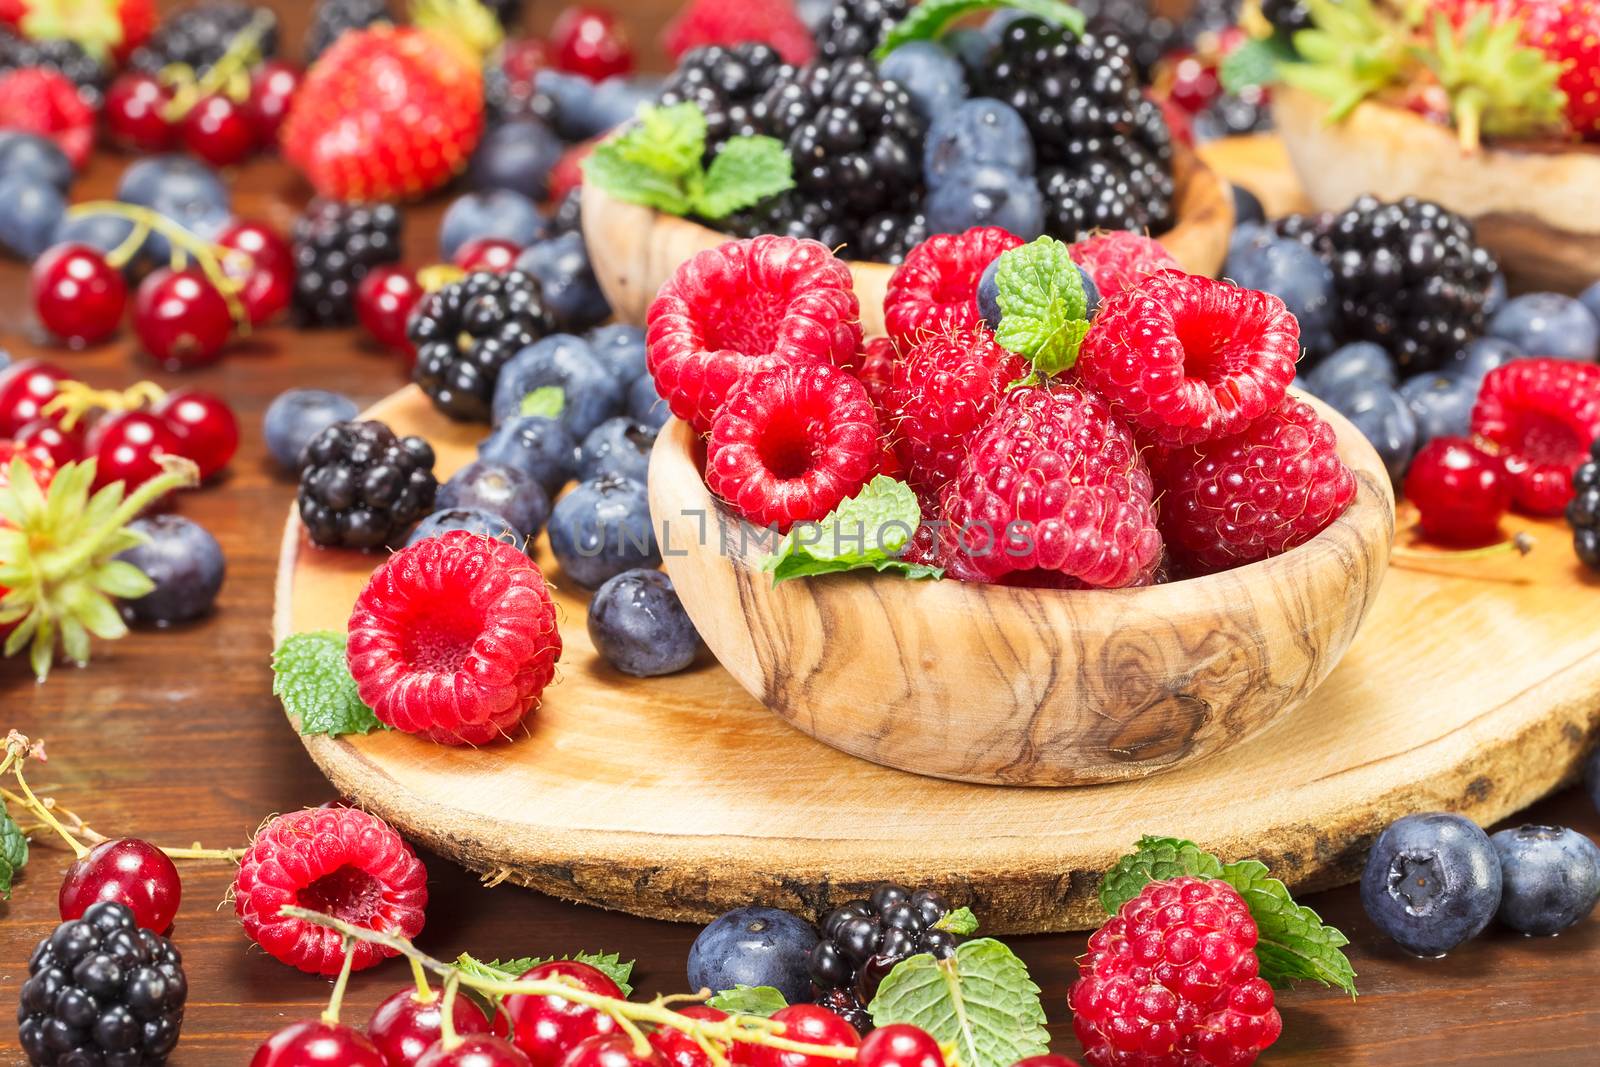 Mix of fresh summer berries by Slast20